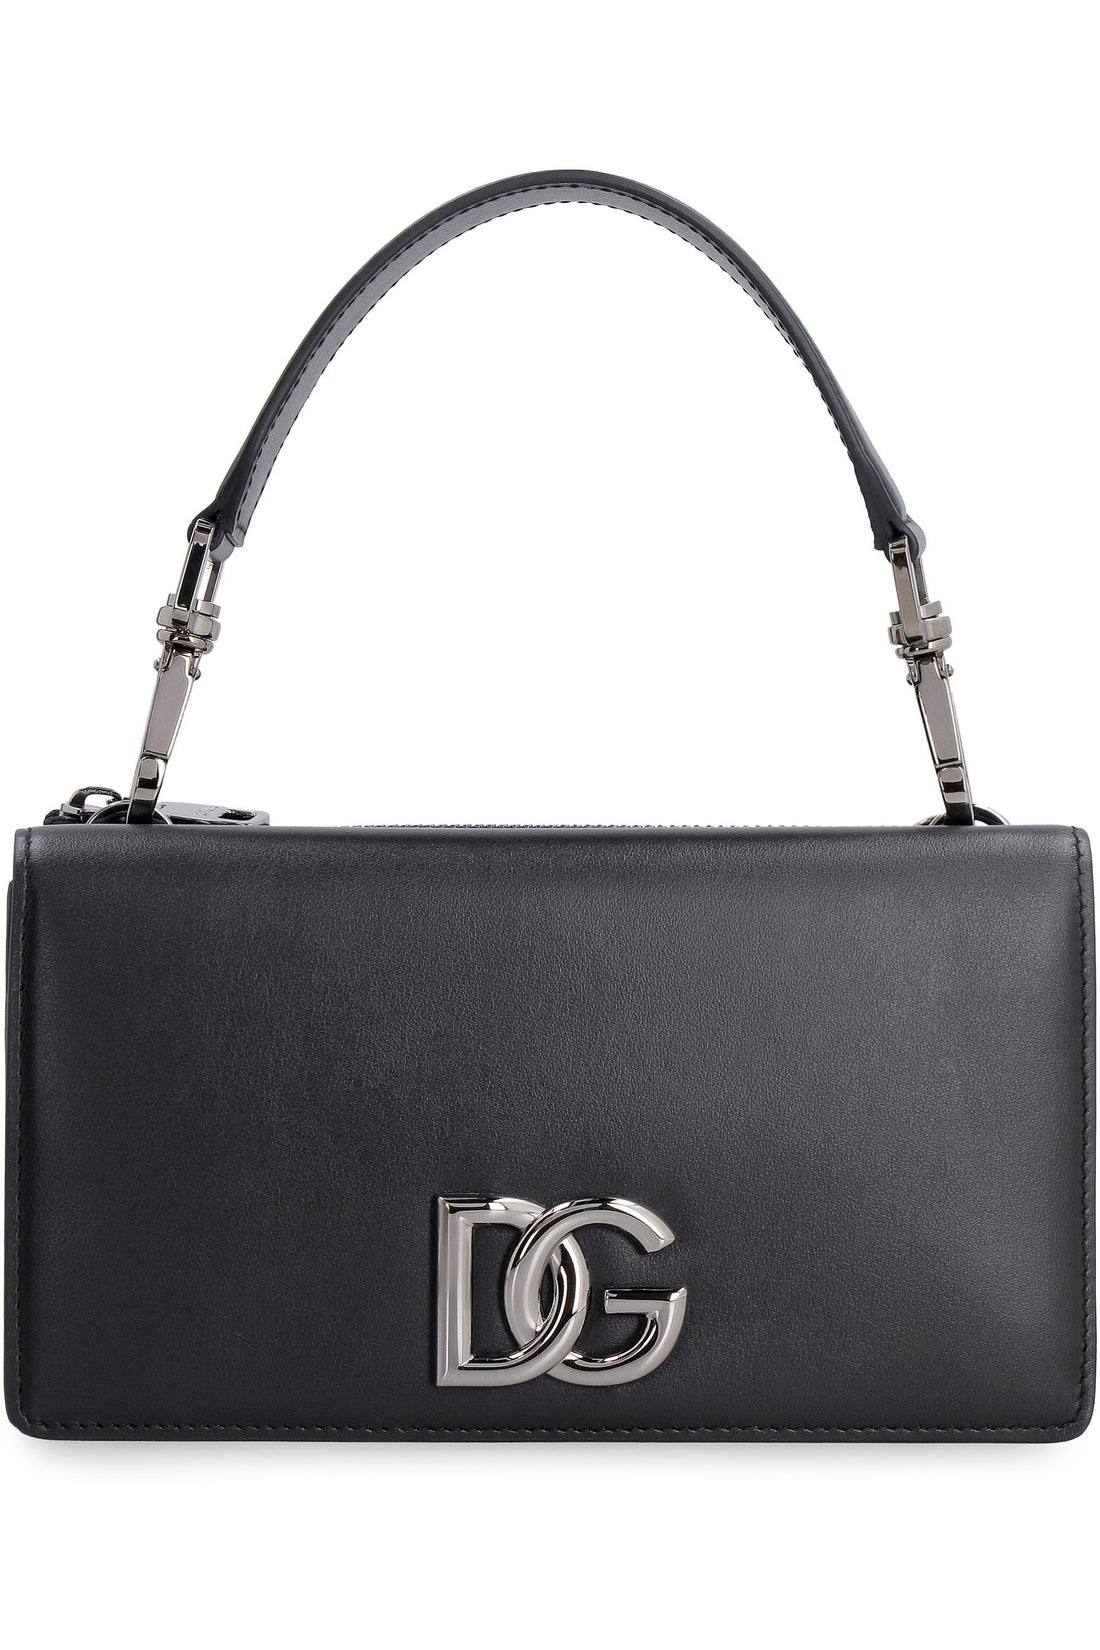 Dolce & Gabbana-OUTLET-SALE-Leather mini handbag-ARCHIVIST